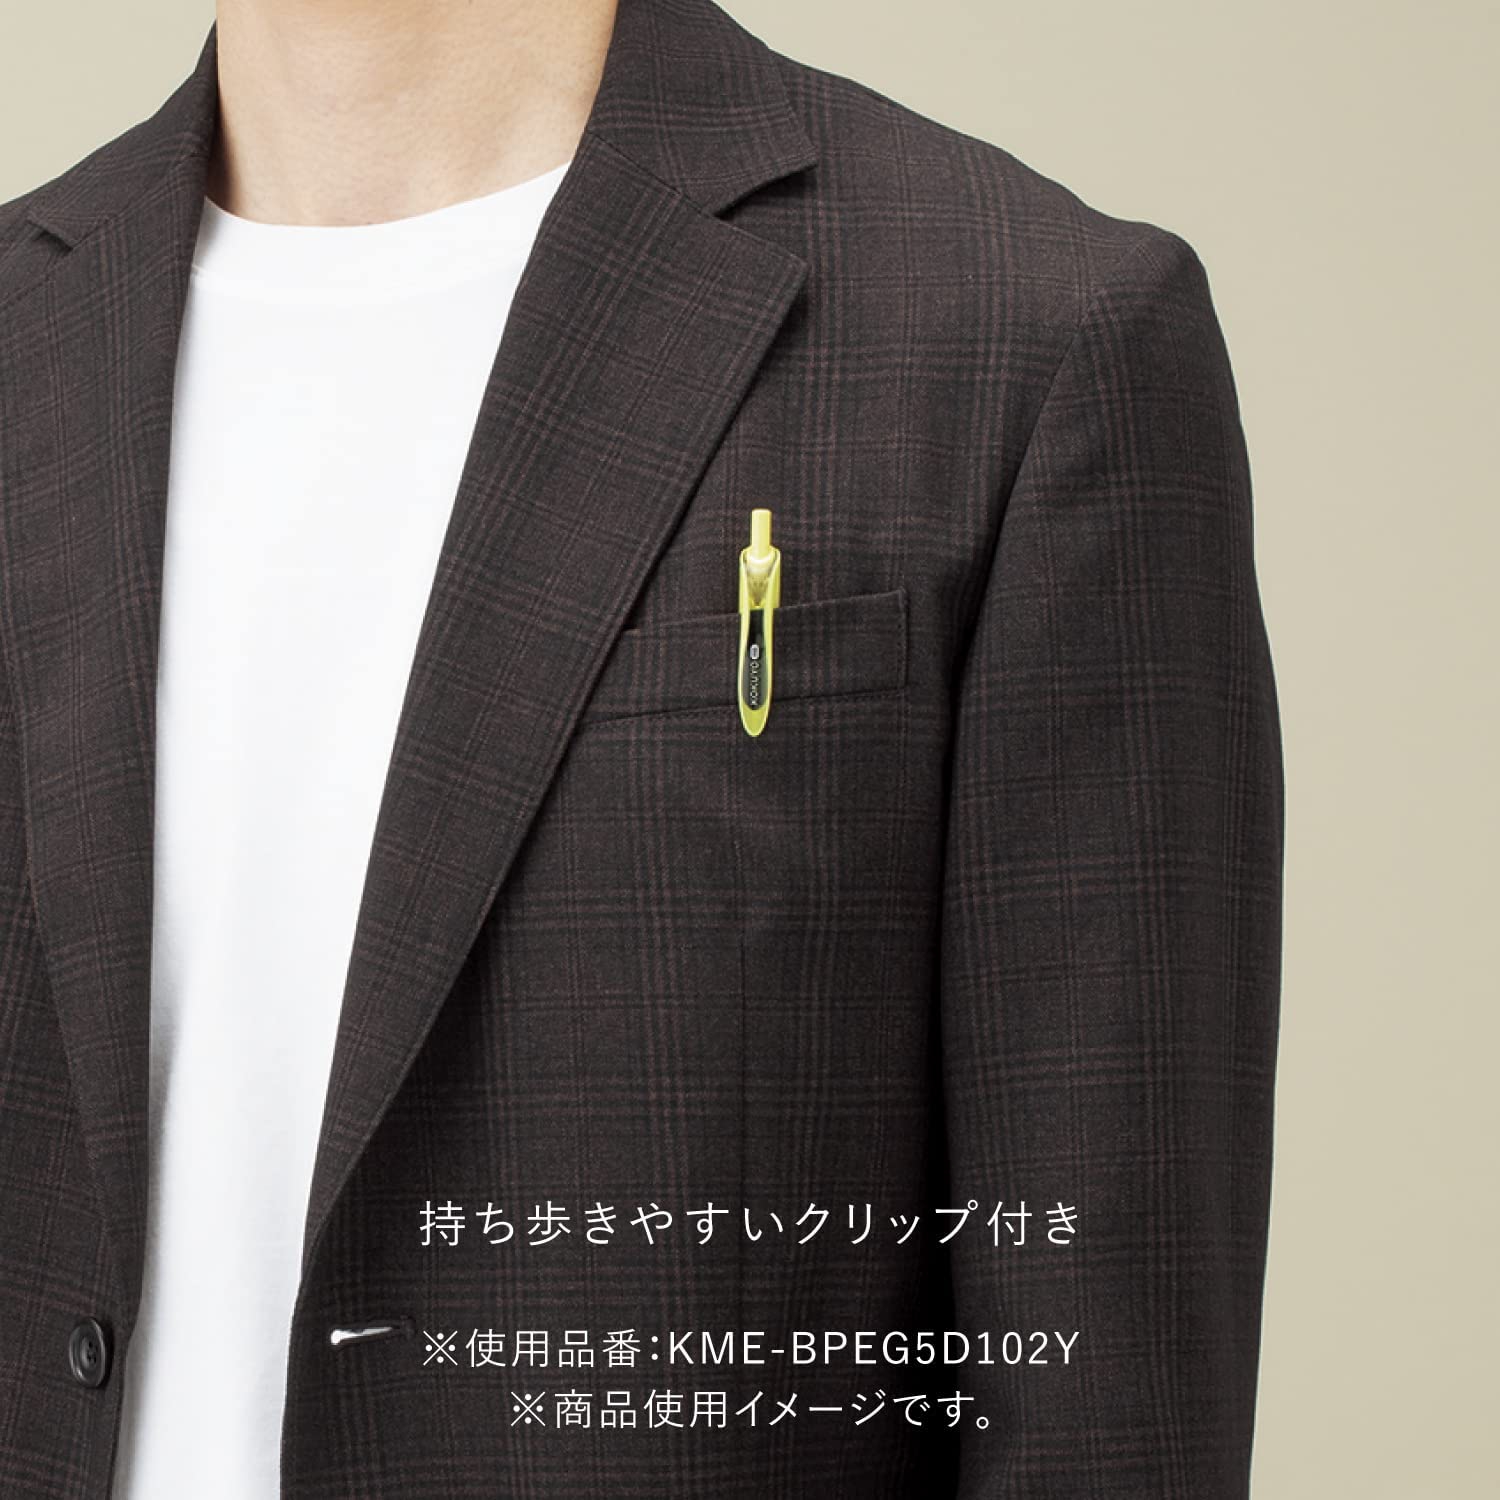 KOKUYO(コクヨ) ME ボールペンの商品画像4 